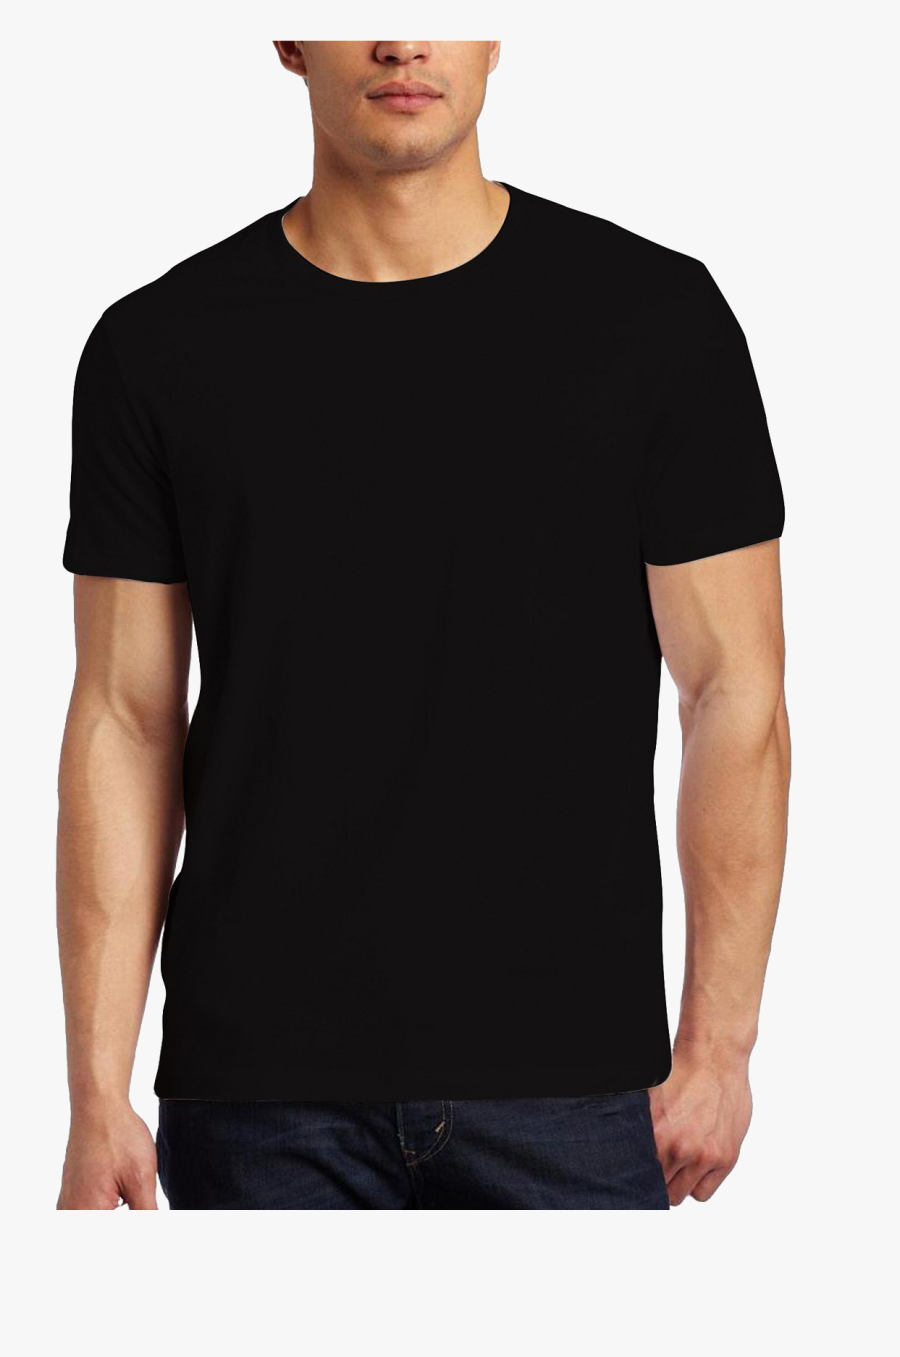 Black T-shirt Png Image Background - Real Black T Shirt Template, Transparent Clipart